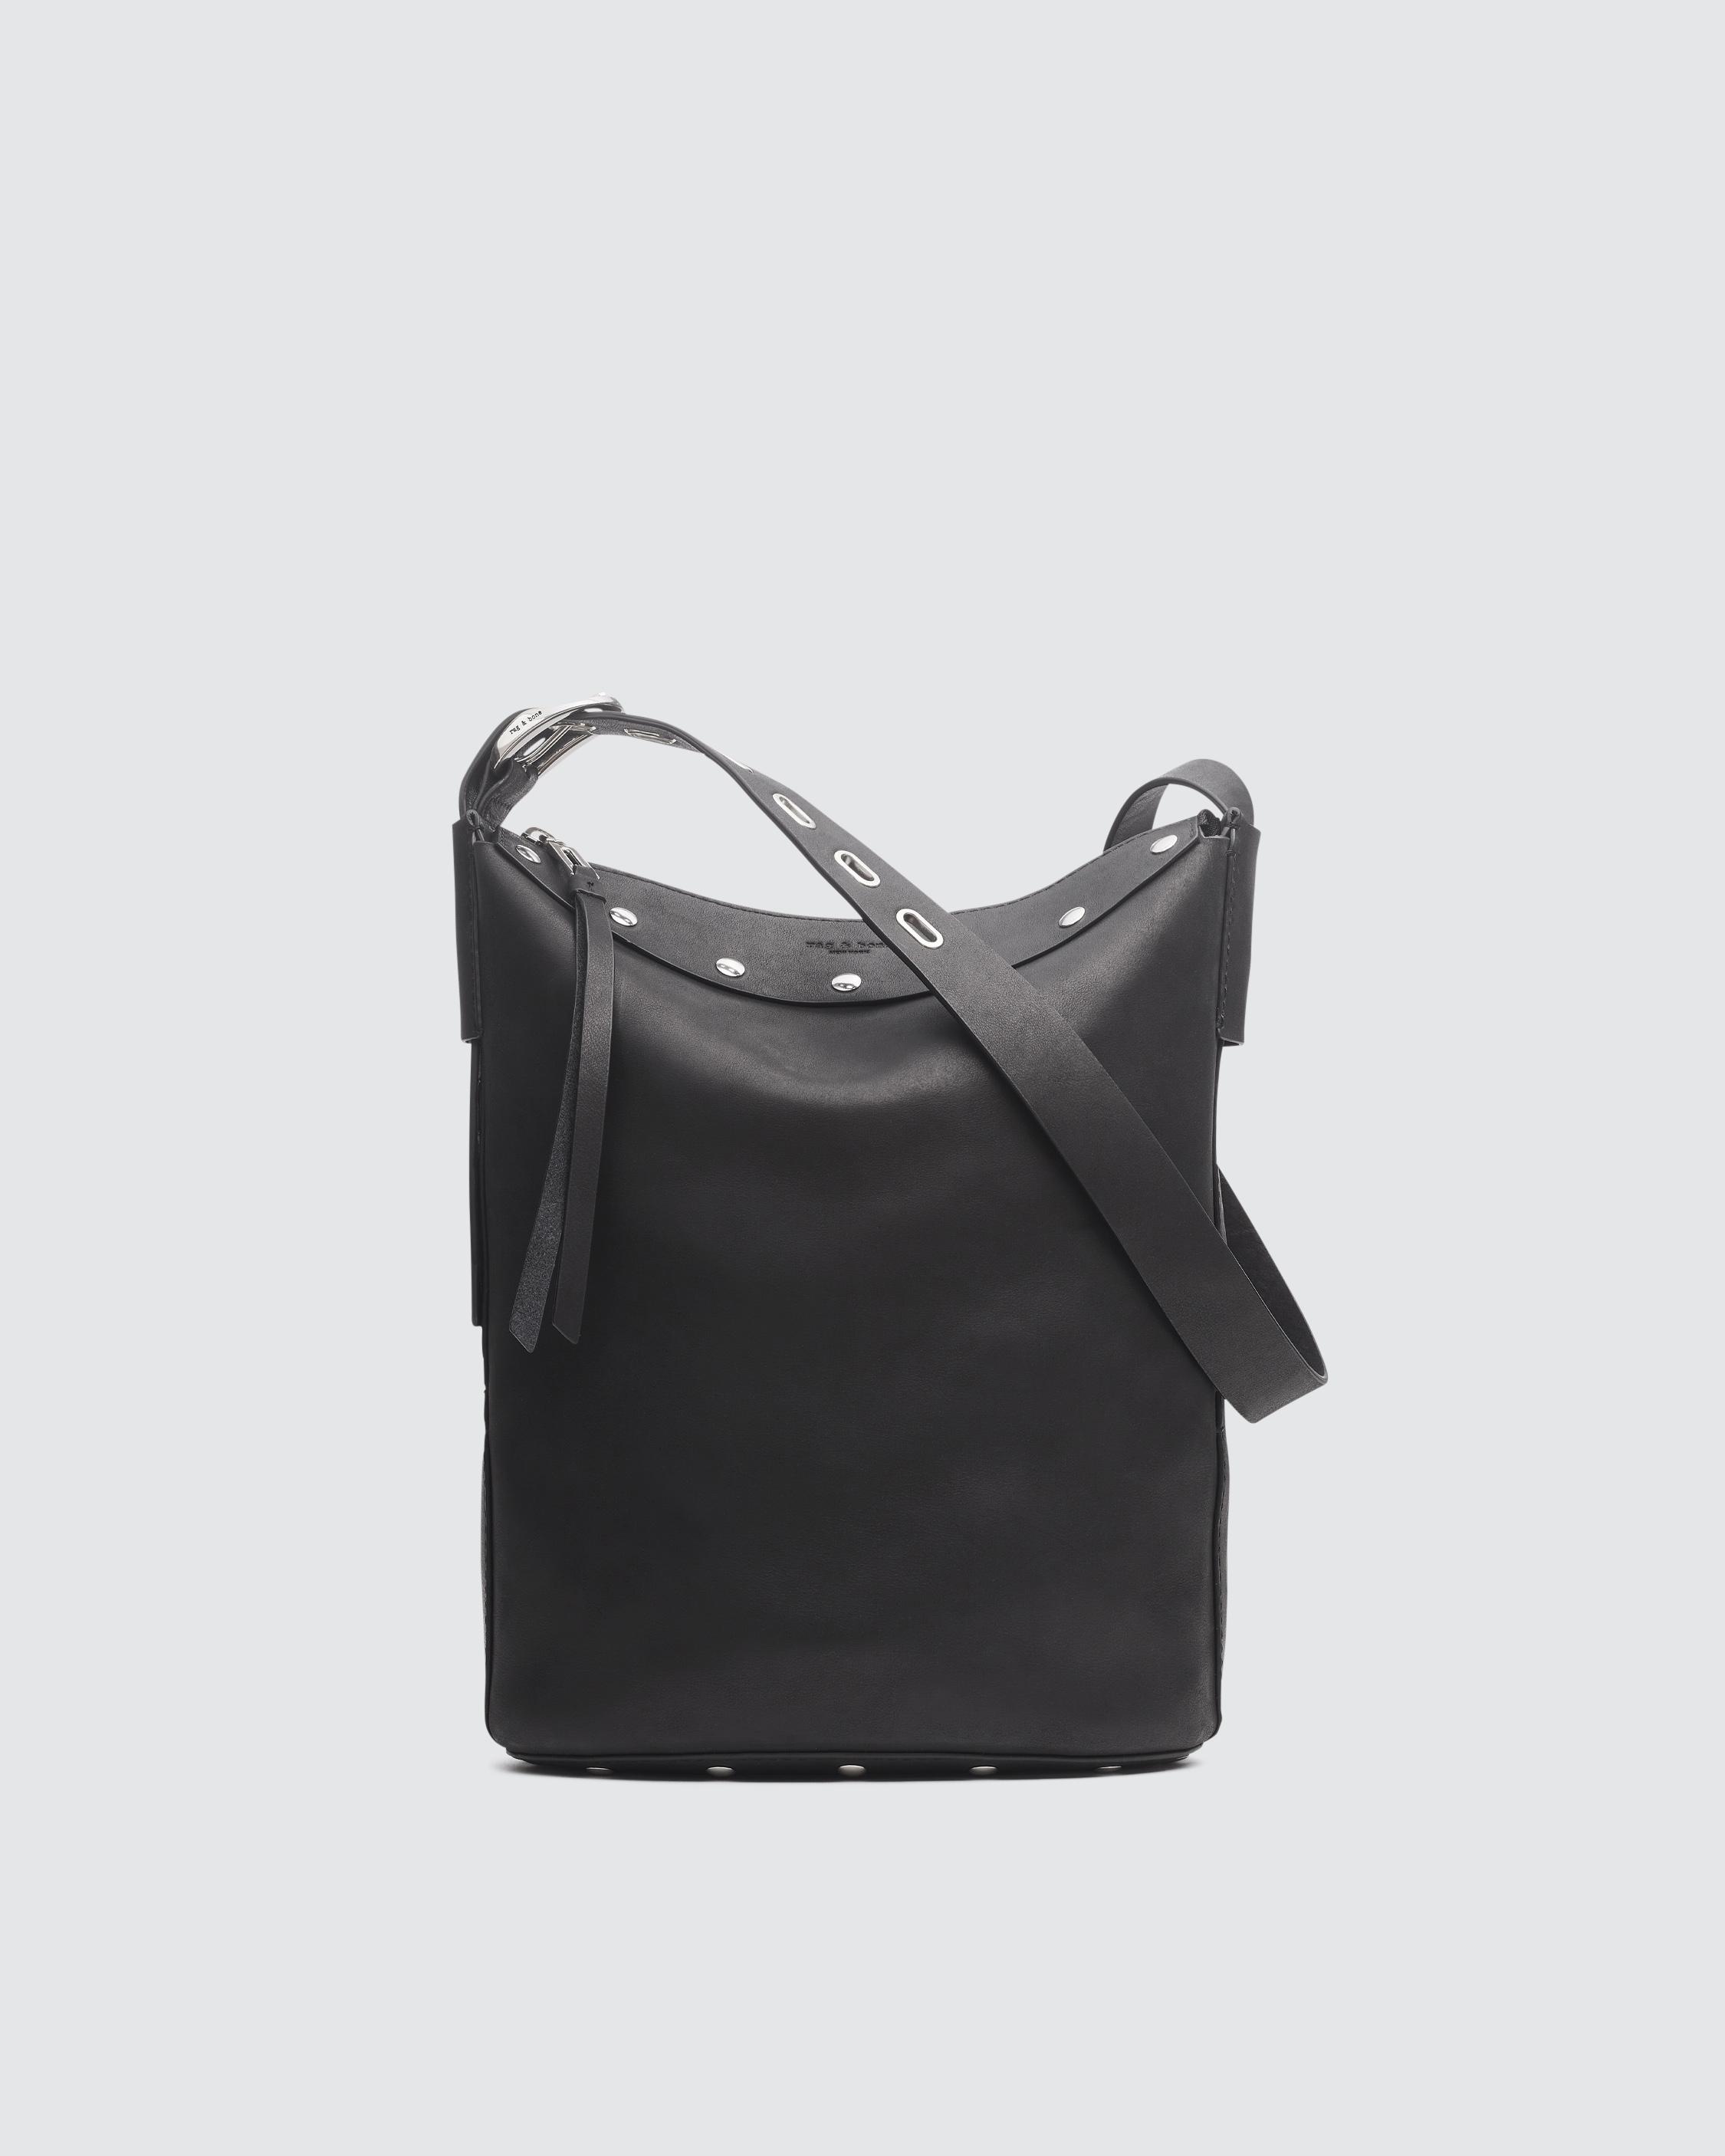 Belize Bucket Bag - Leather
Crossbody Bag - 1